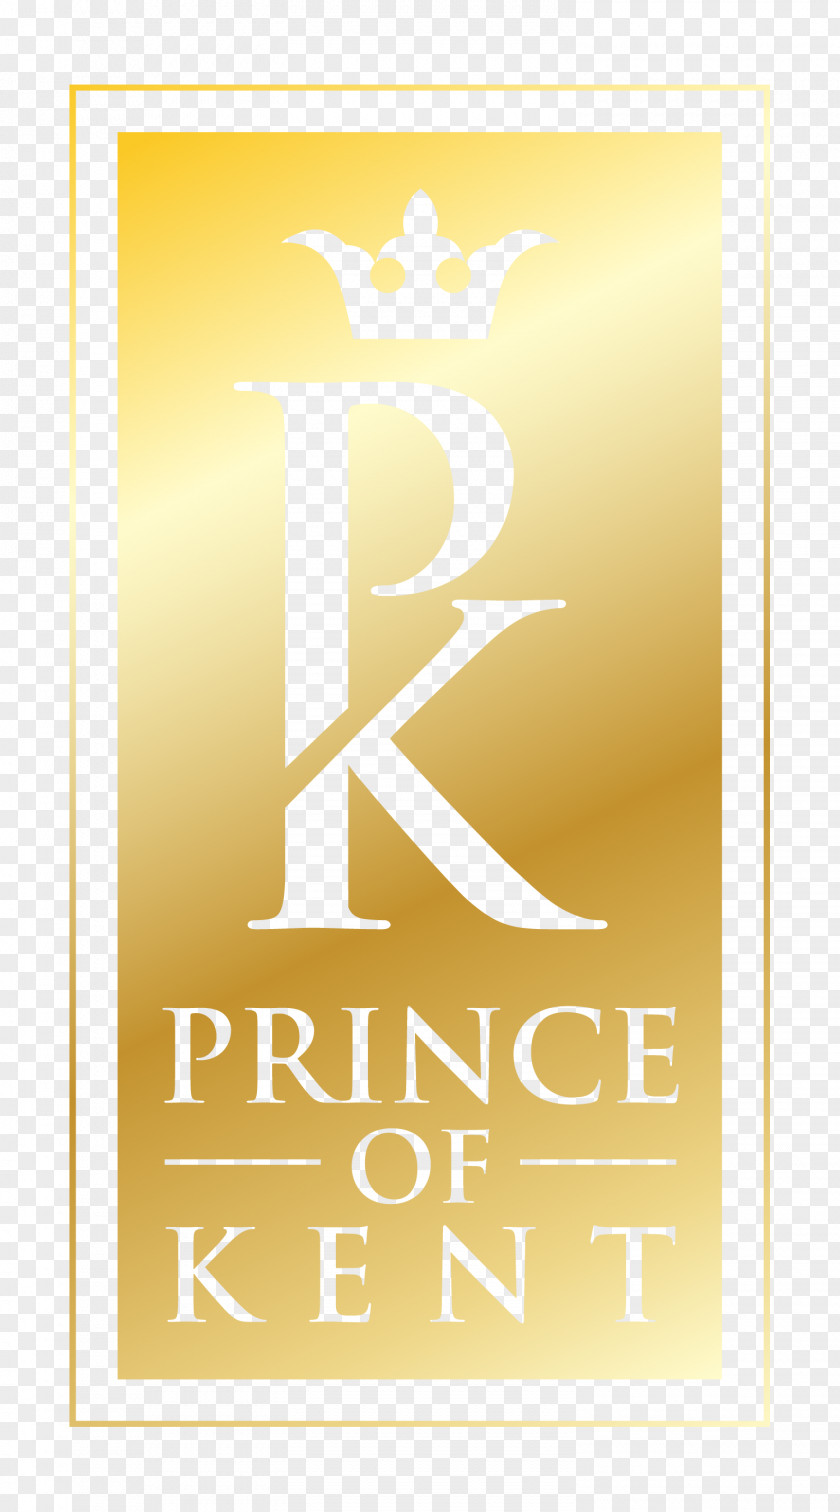 Prince Logo Domando Jack Kemble Princess In Chains Humour Amazon.com PNG